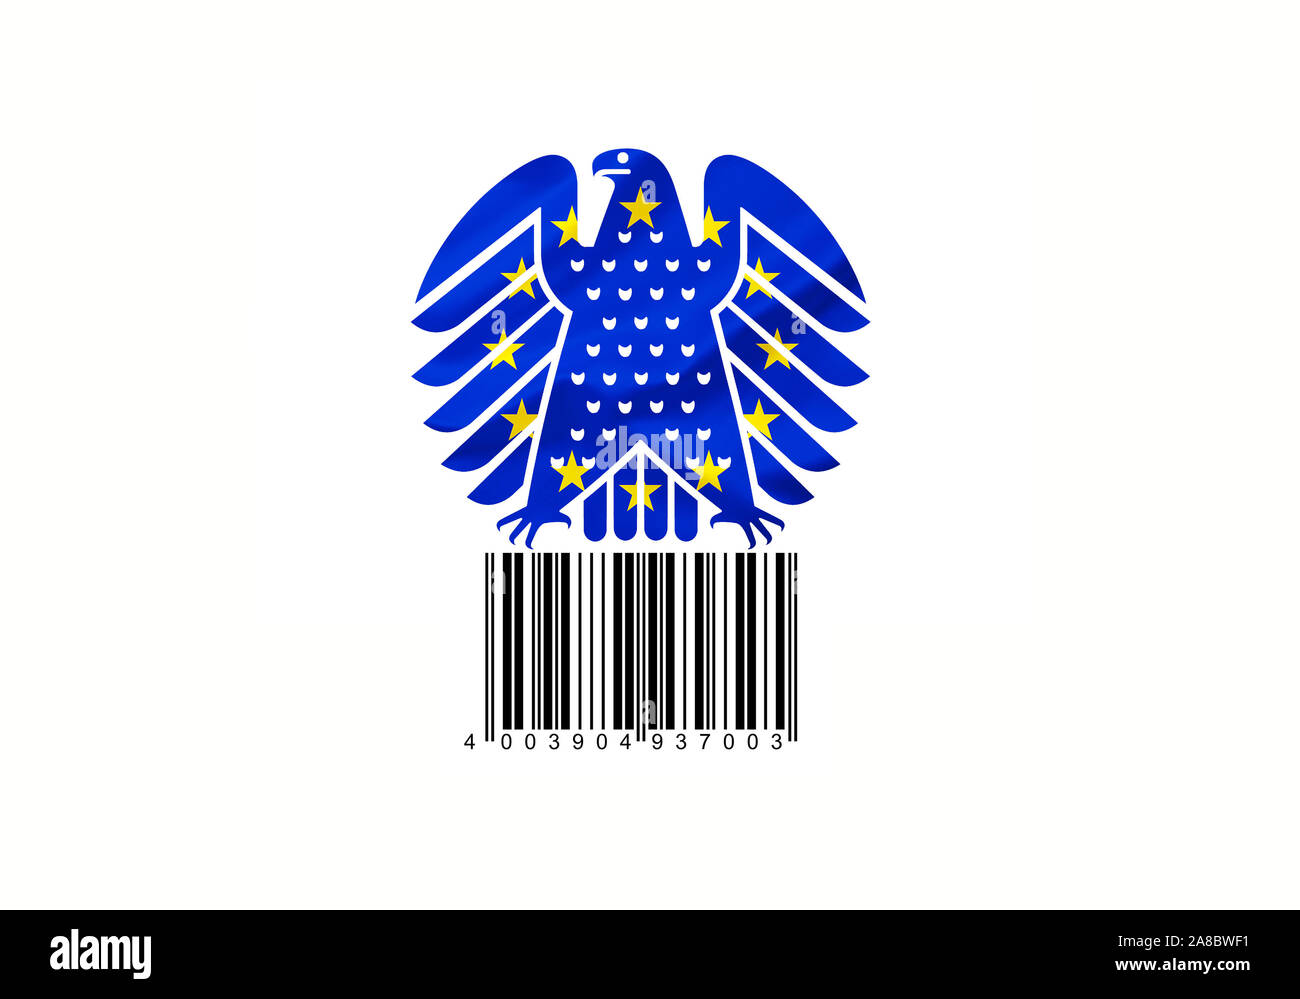 IAN; Europaeische Artikel Nummer, European Articel Number, Strichcode, Barcode, EU-Norm, Bundesadler; EU-Adler, Stock Photo